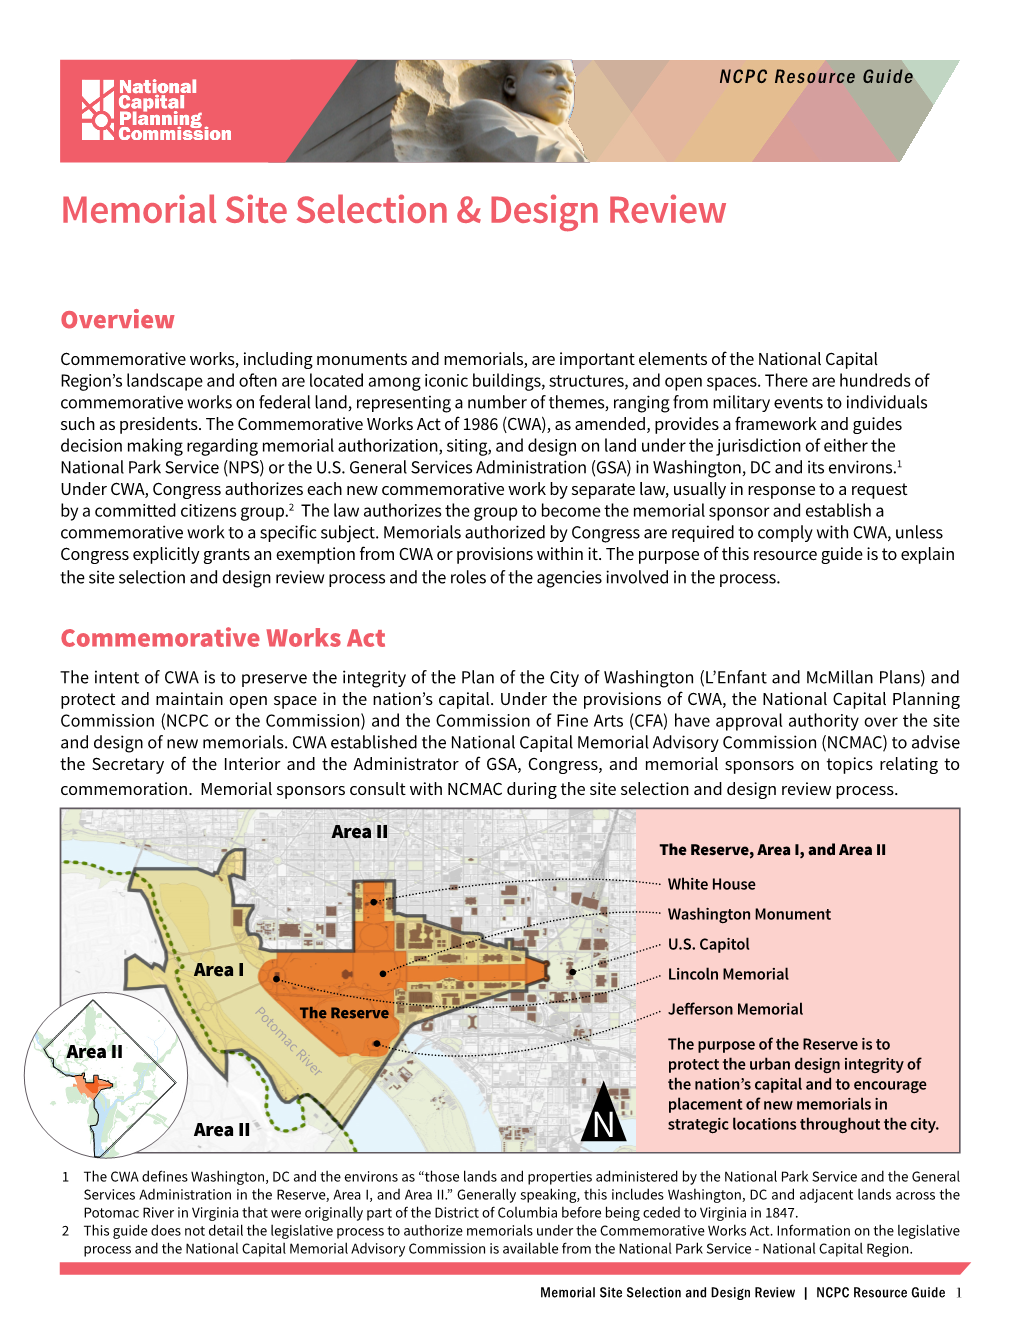 Memorial Site Selection Resource Guide 2019